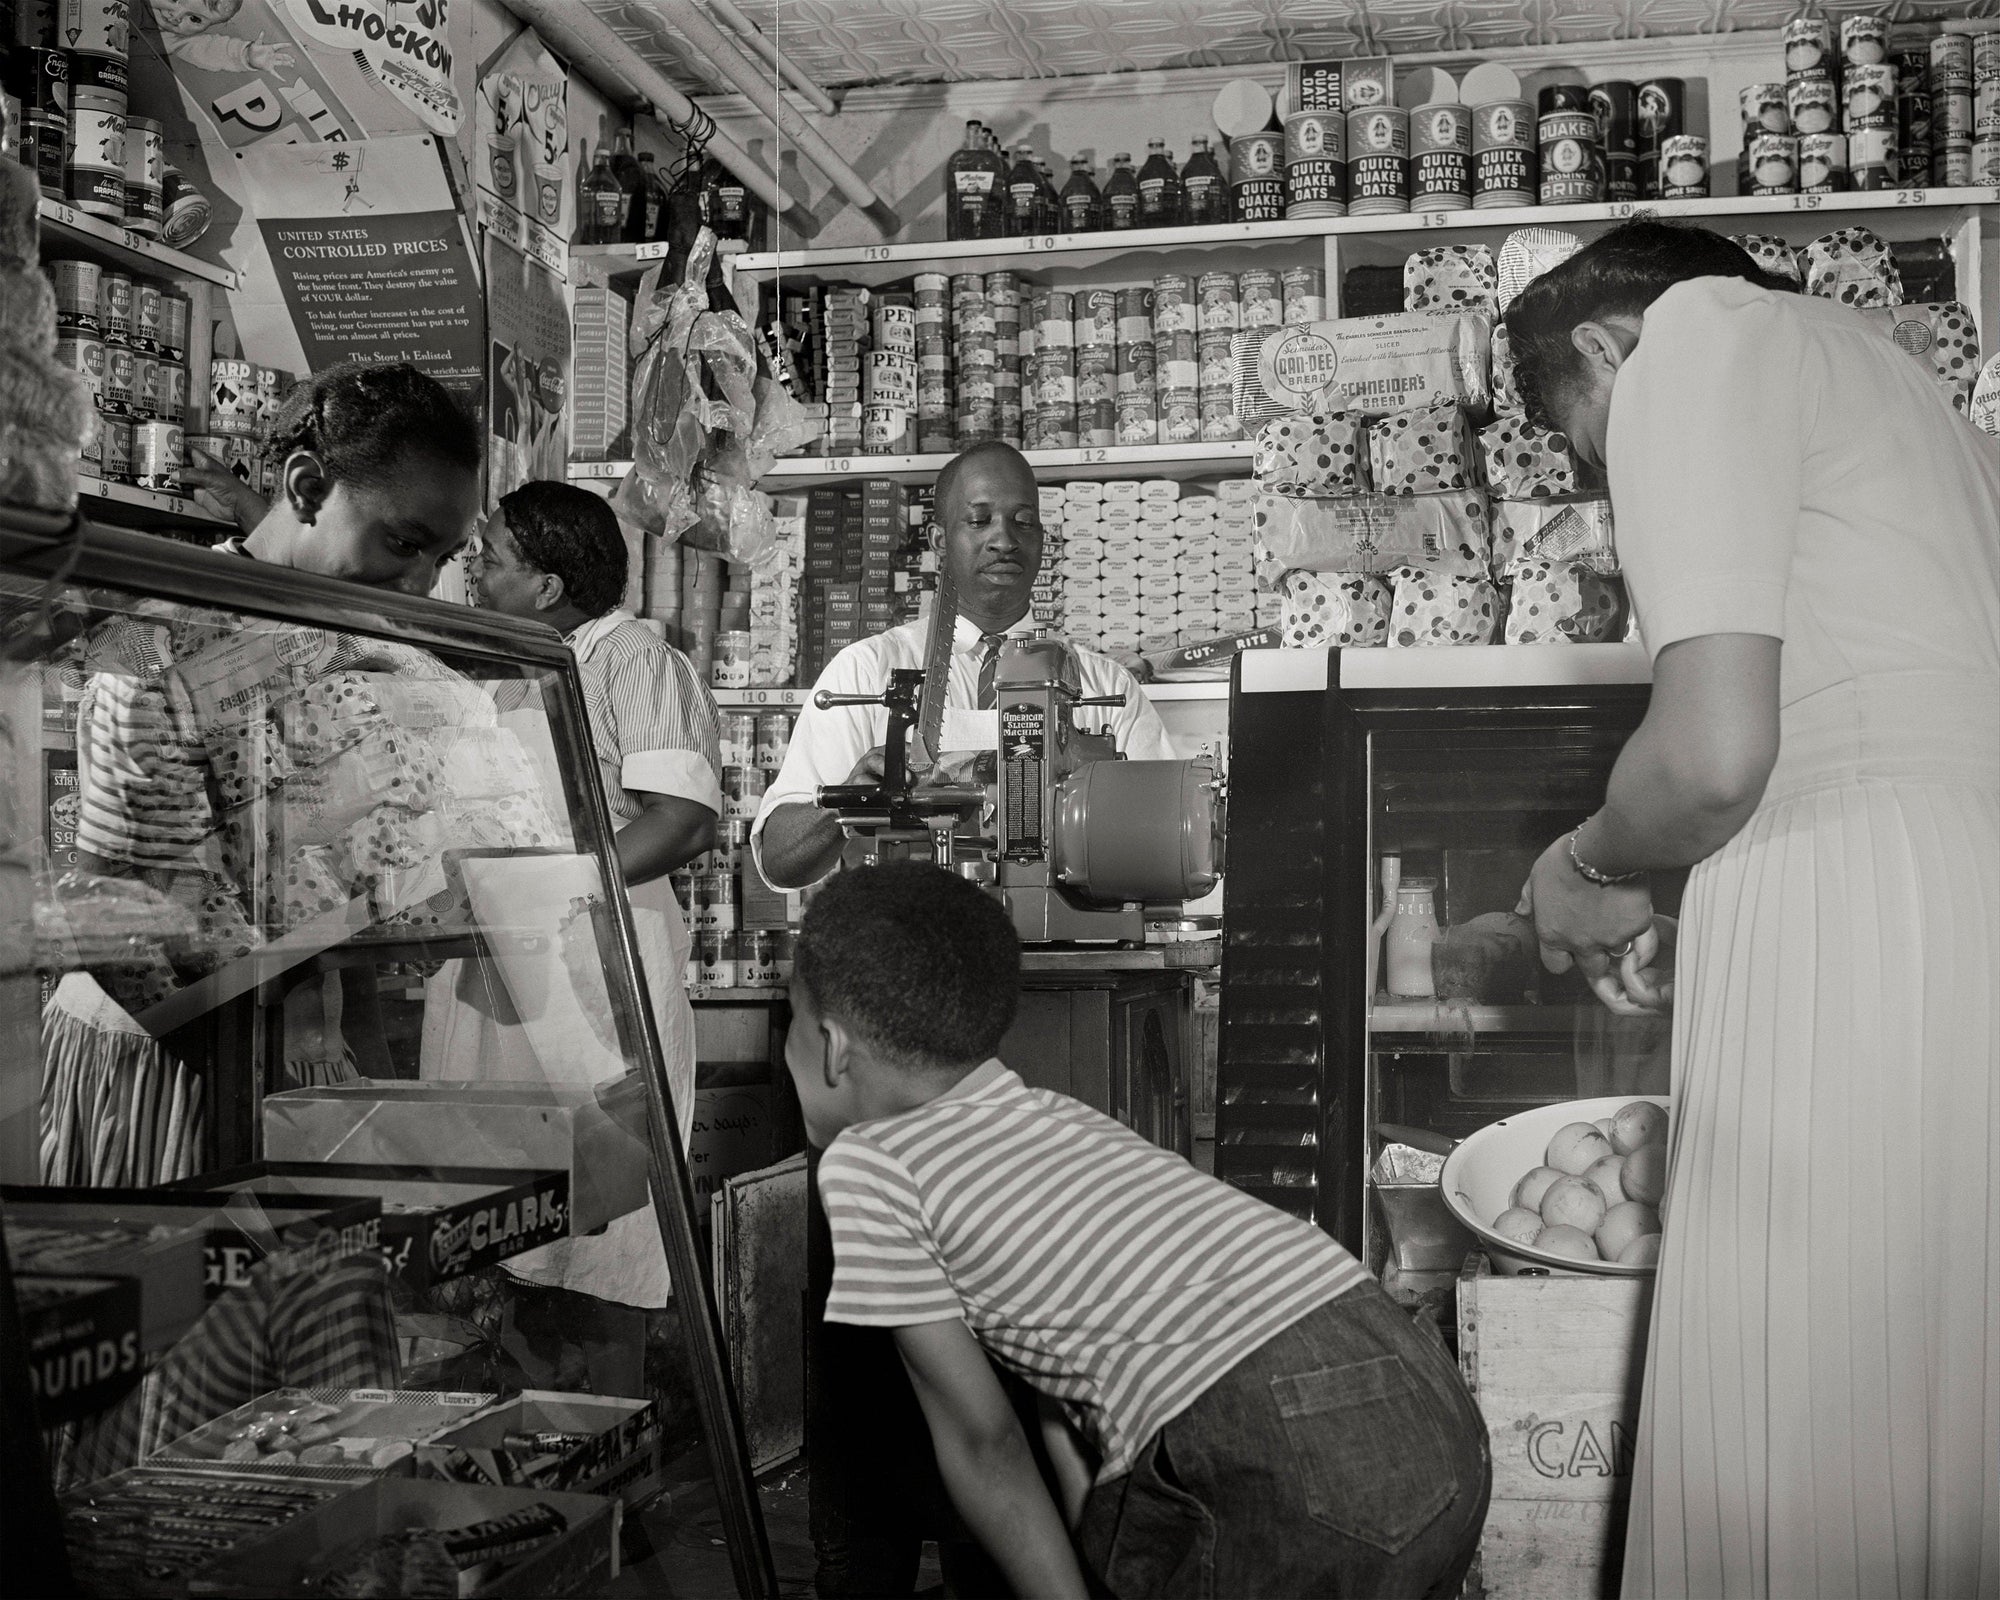 Gordon Park's Washington DC Grocery Store Photo, 1942 Historical Pix